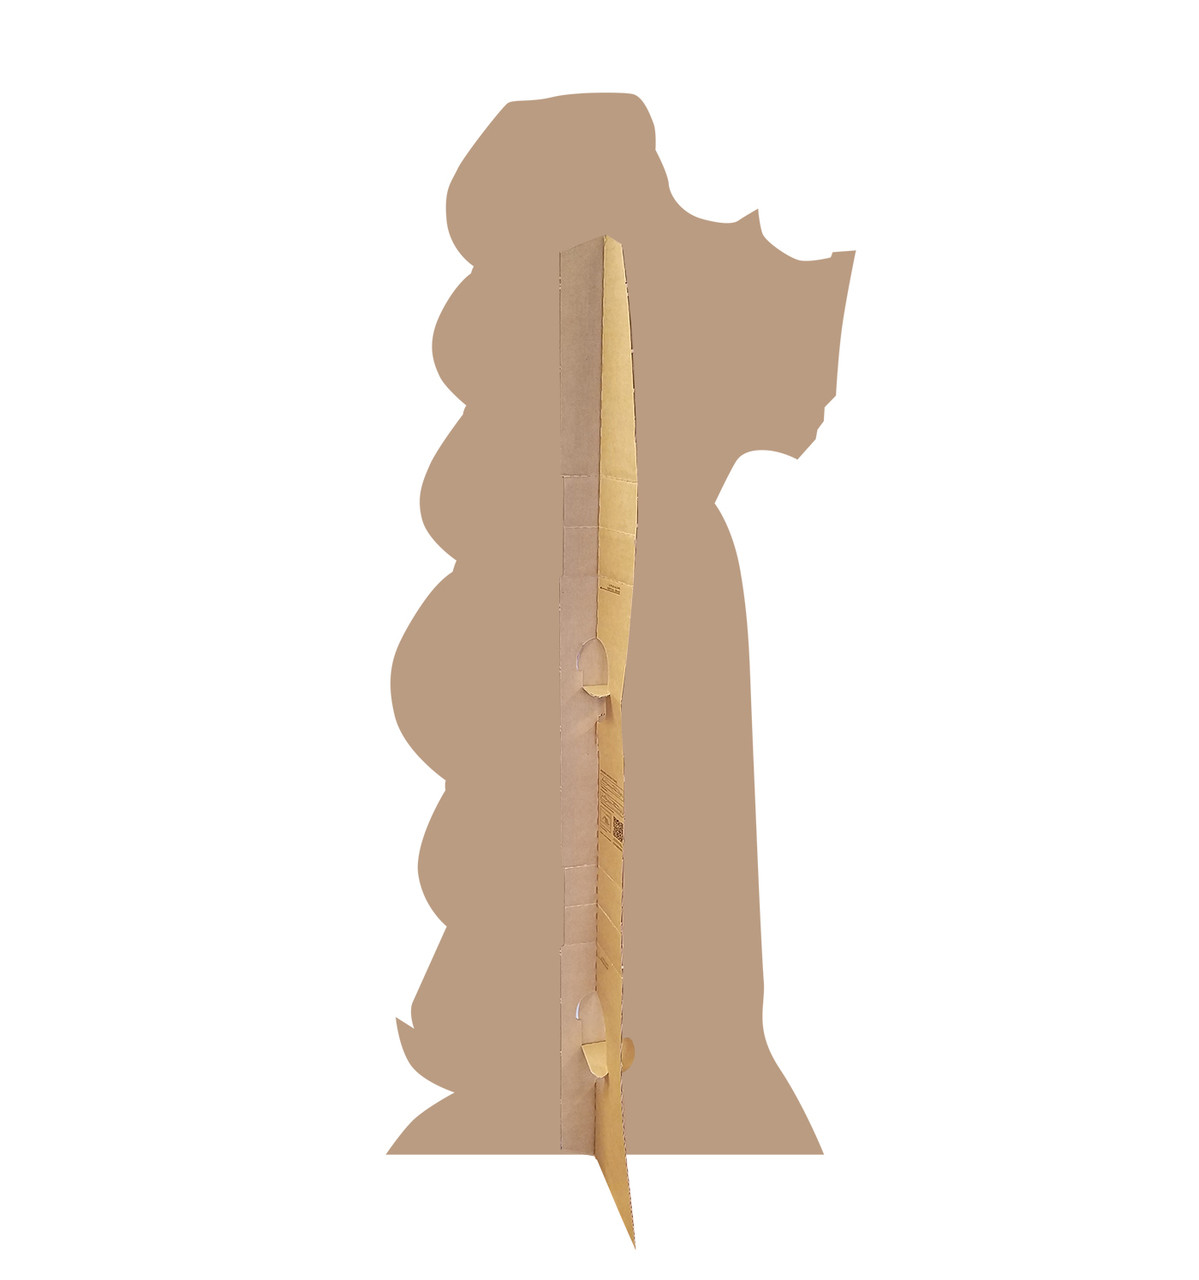 Life-size Rapunzel (Tangled The Series) Cardboard Standup |Cardboard Cutout